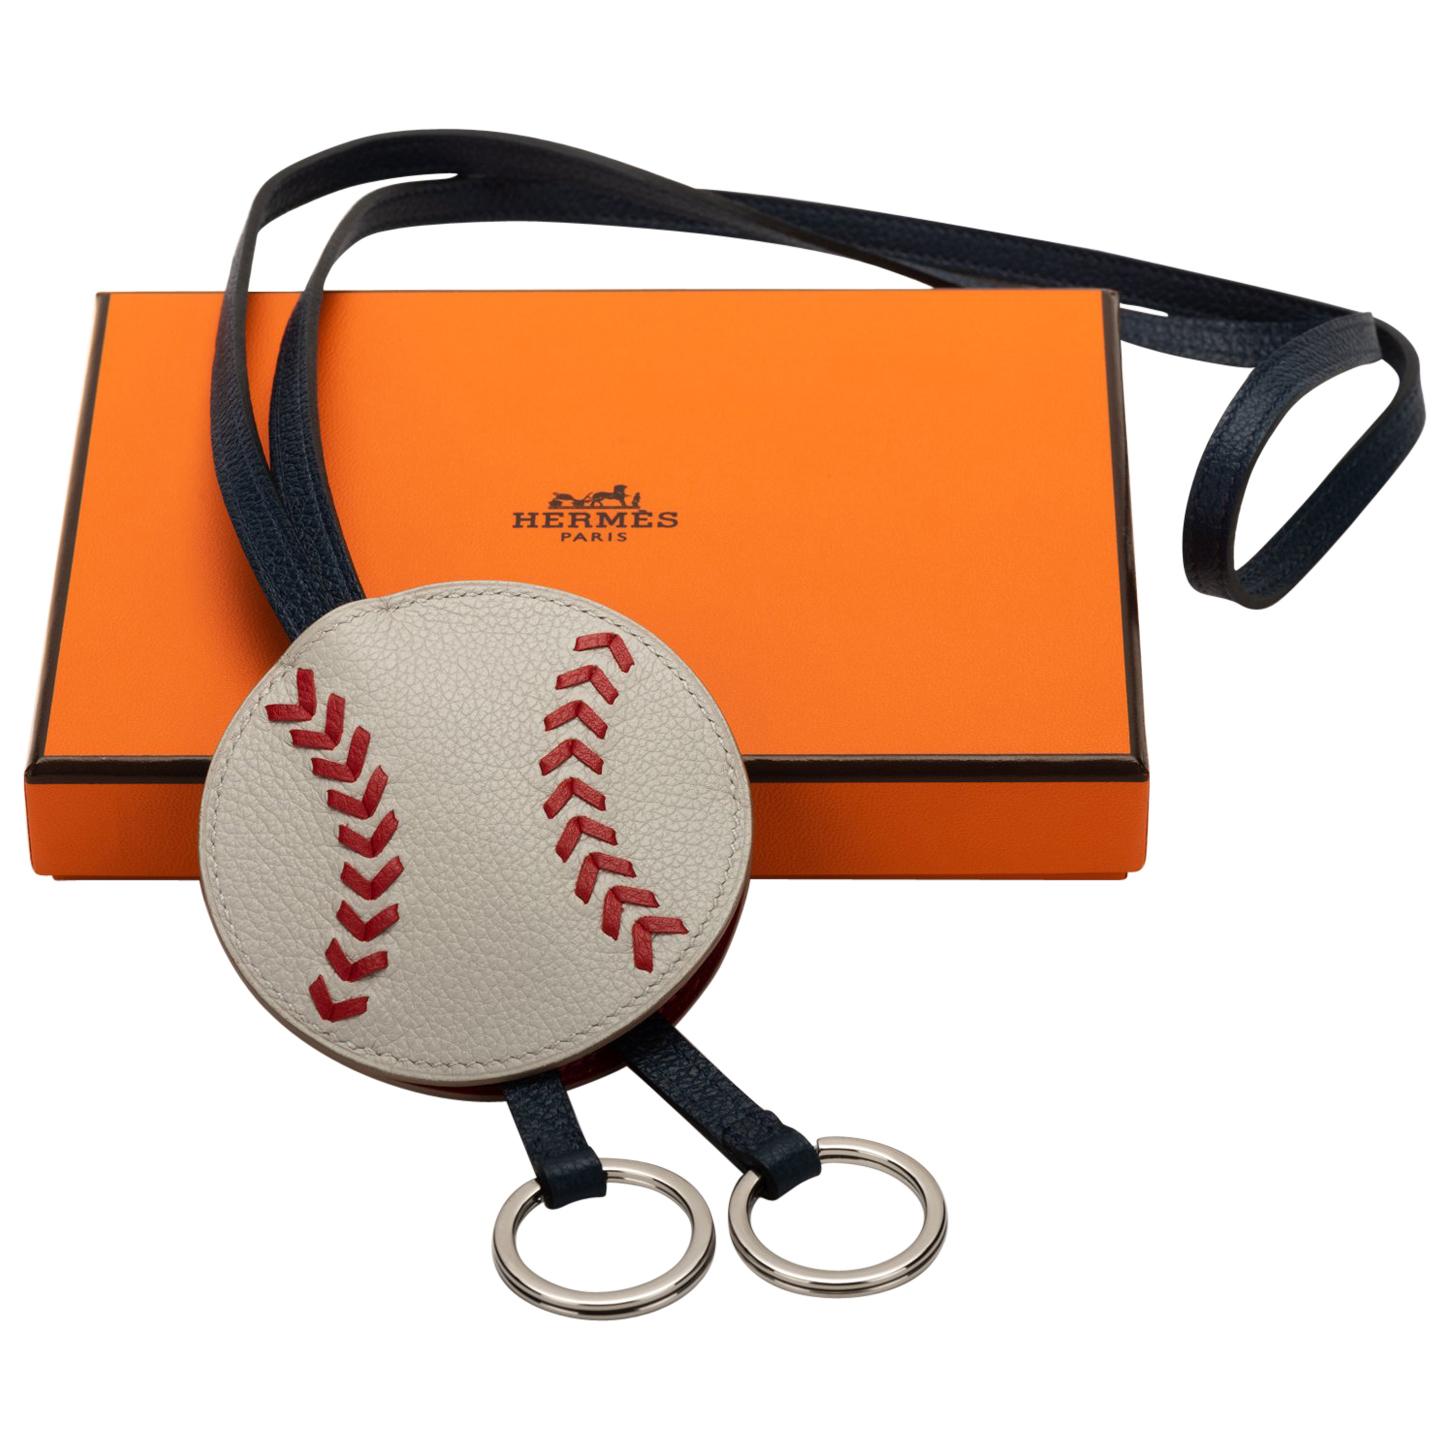 New in  Box Hermes Rare Baseball Keychain